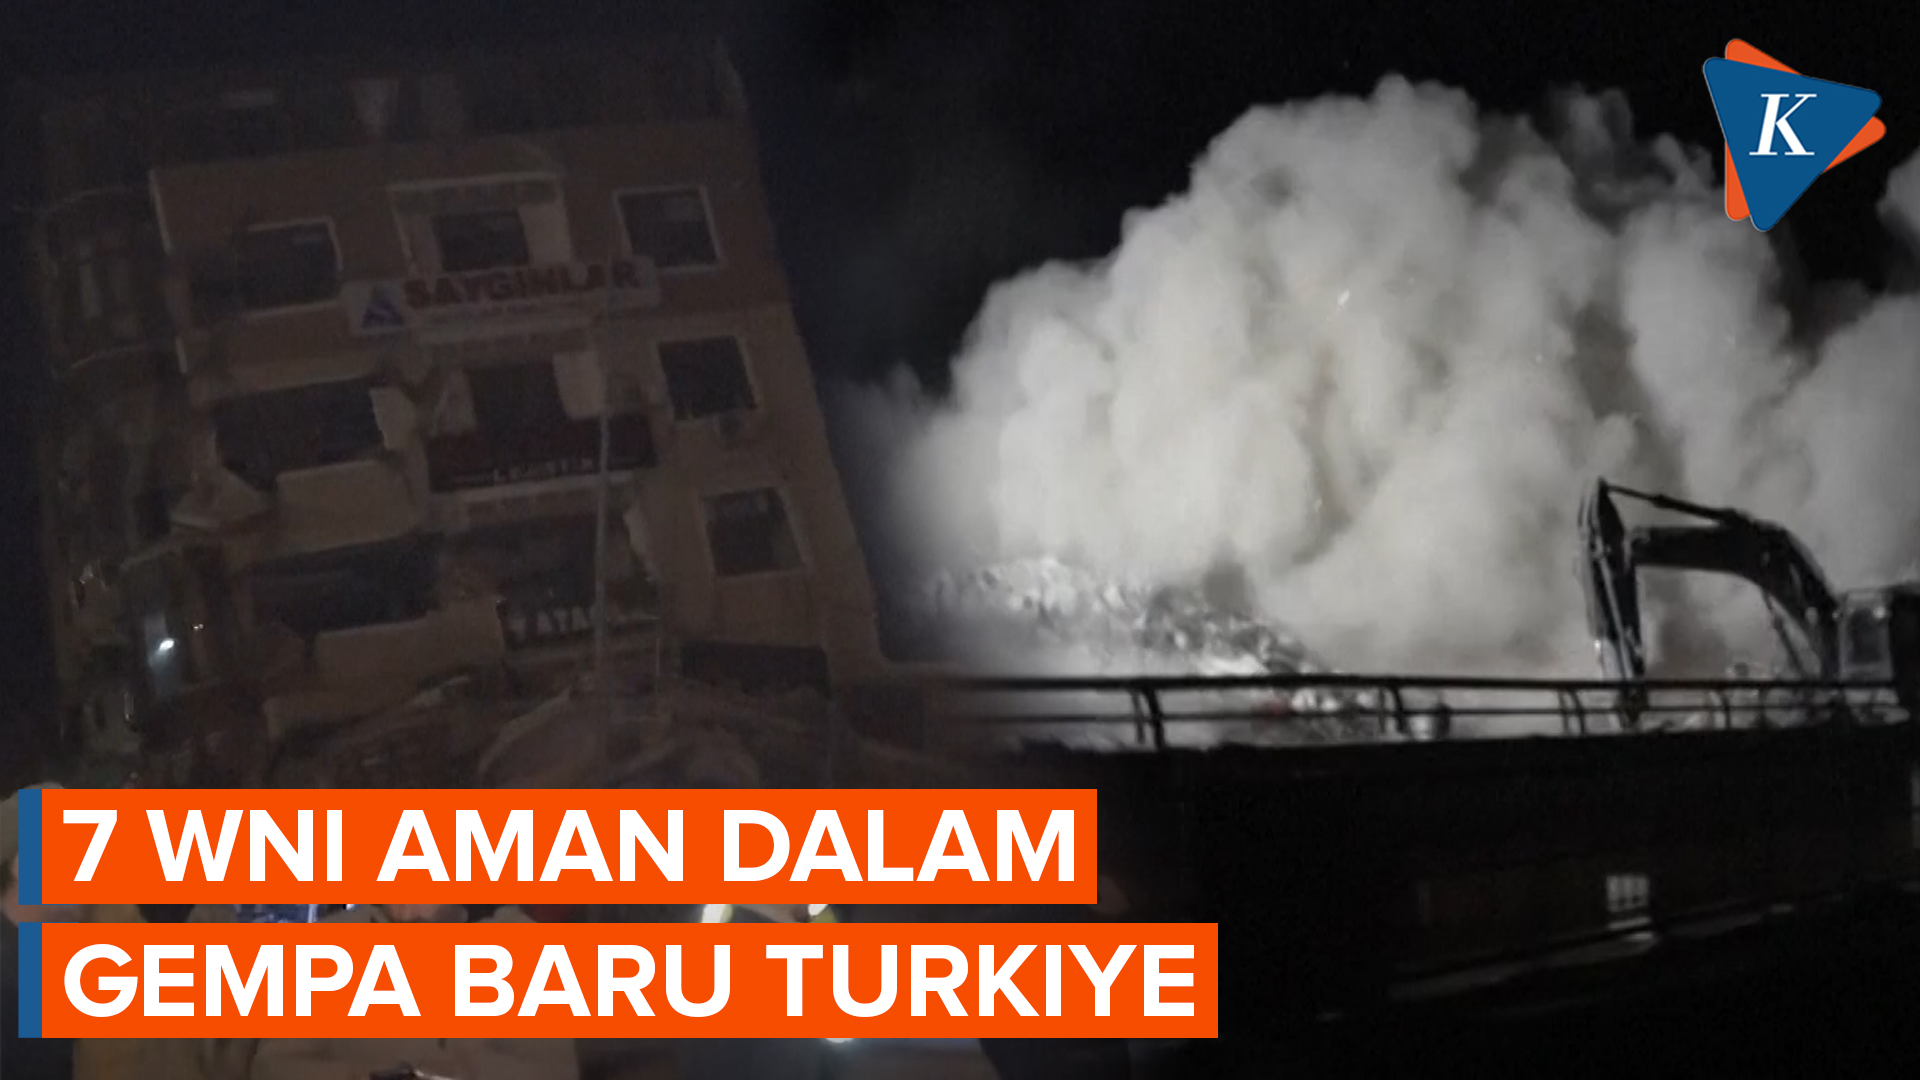 Gempa Baru M 6,4 Guncang Turkiye, Kemlu Pastikan 7 WNI Aman